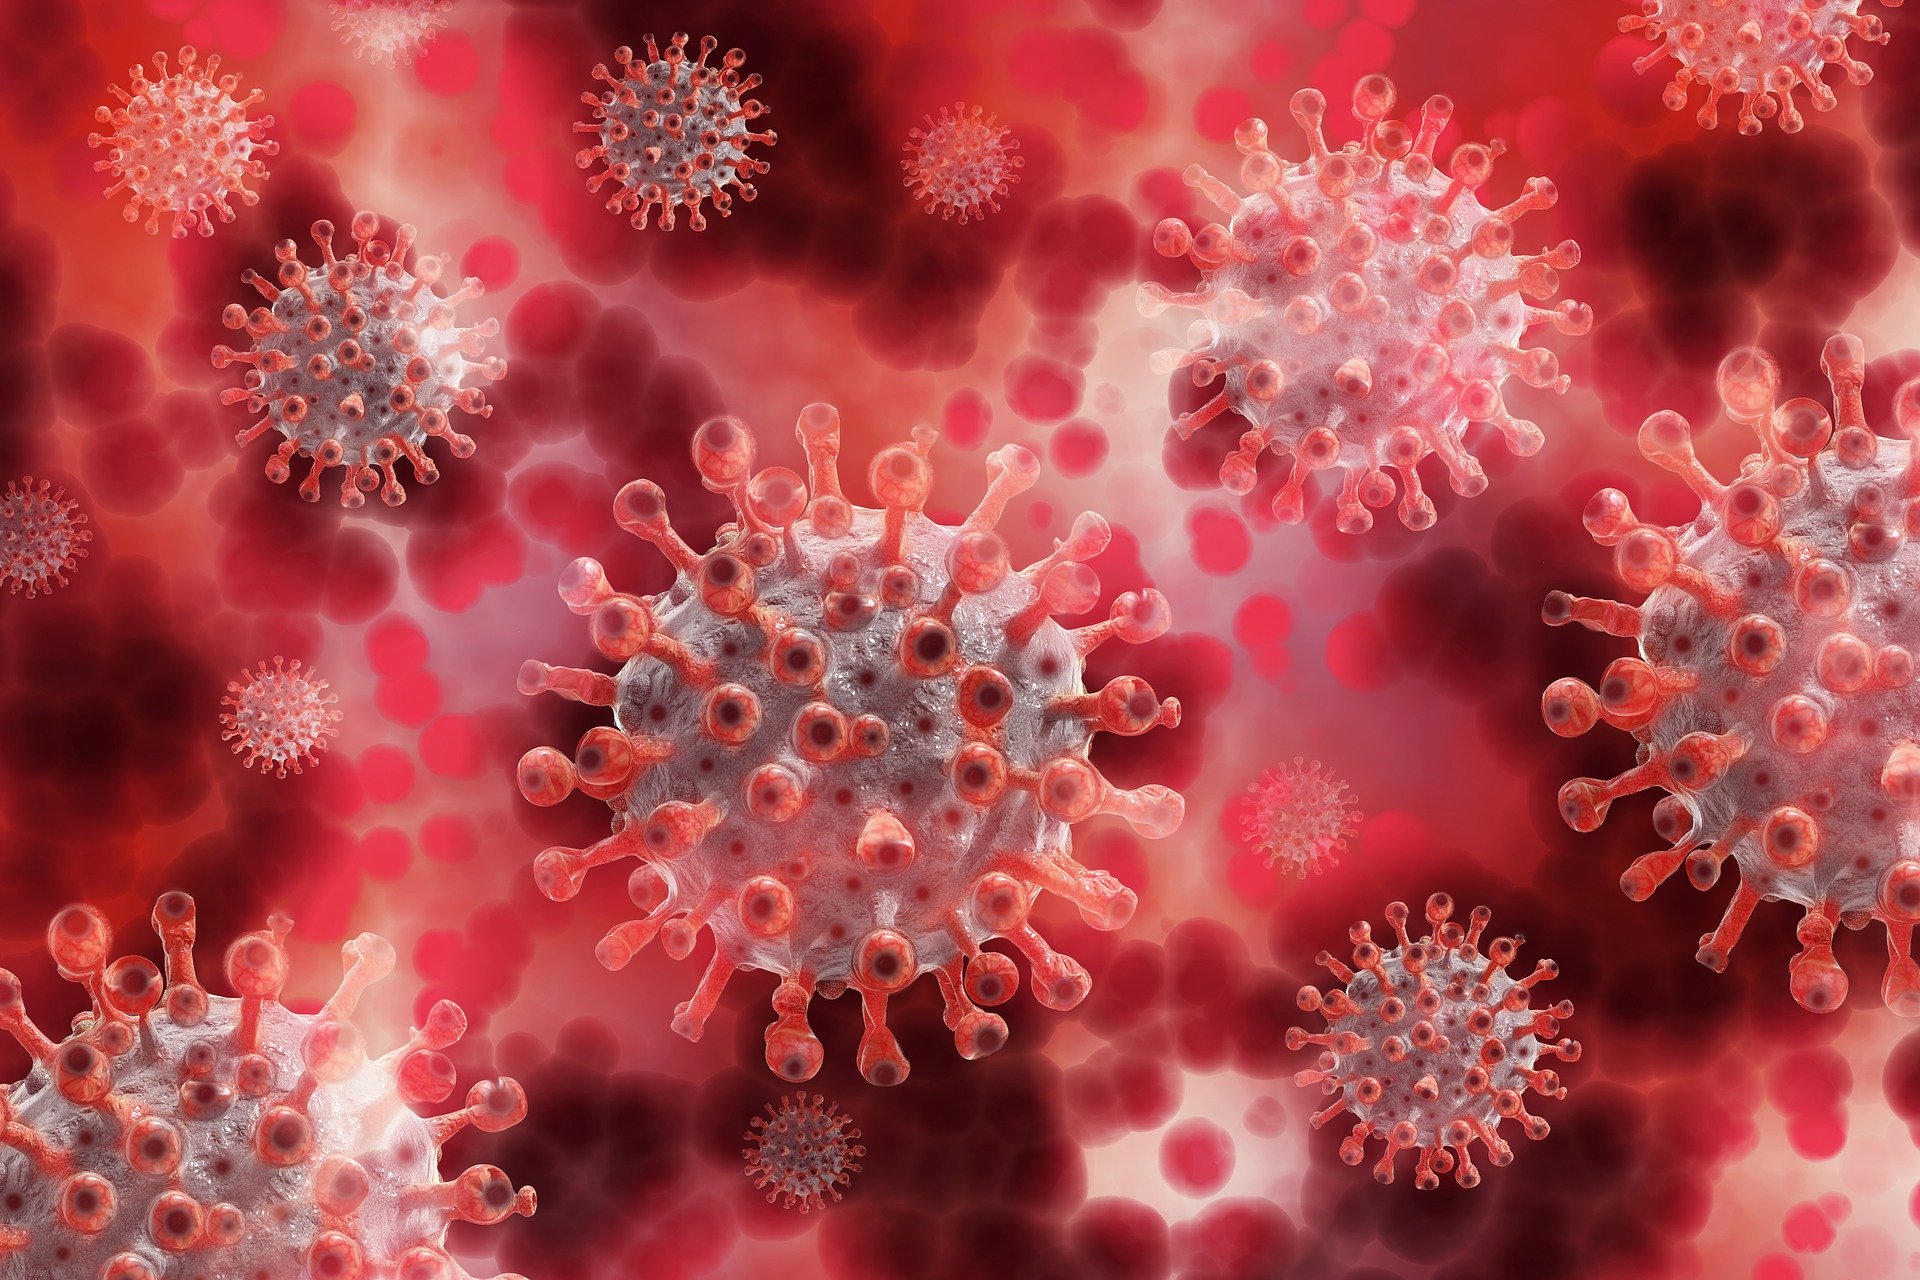 Coronavirus: in Toscana 636 nuovi casi, età media 45 anni. 63 decessi